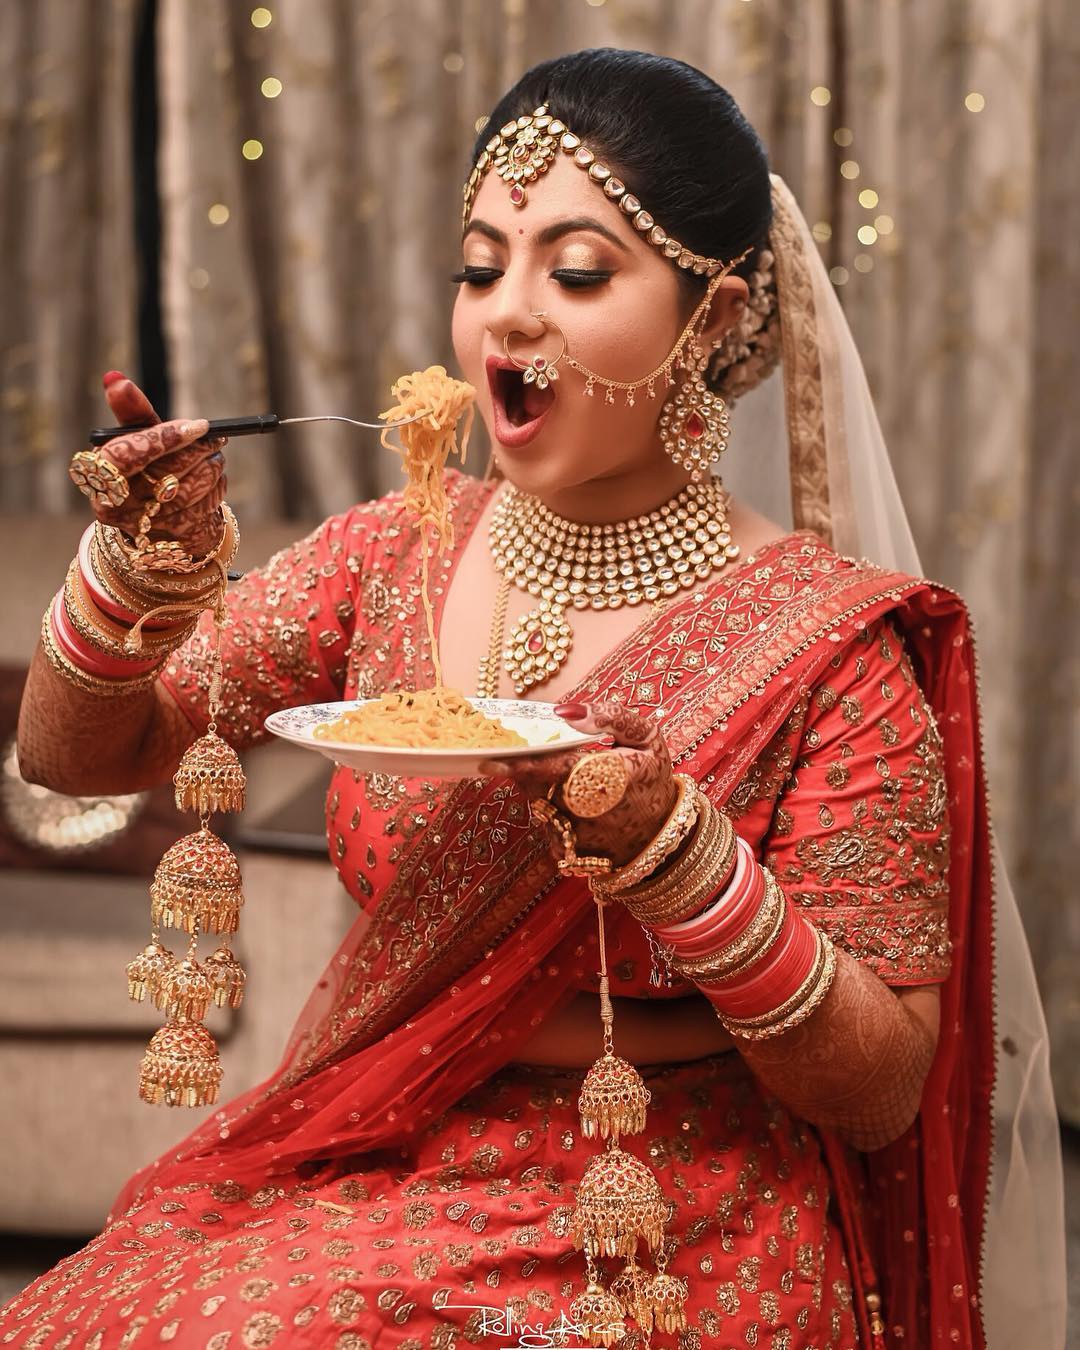 The Best wedding photographer in Kolkata | ranjanb.in